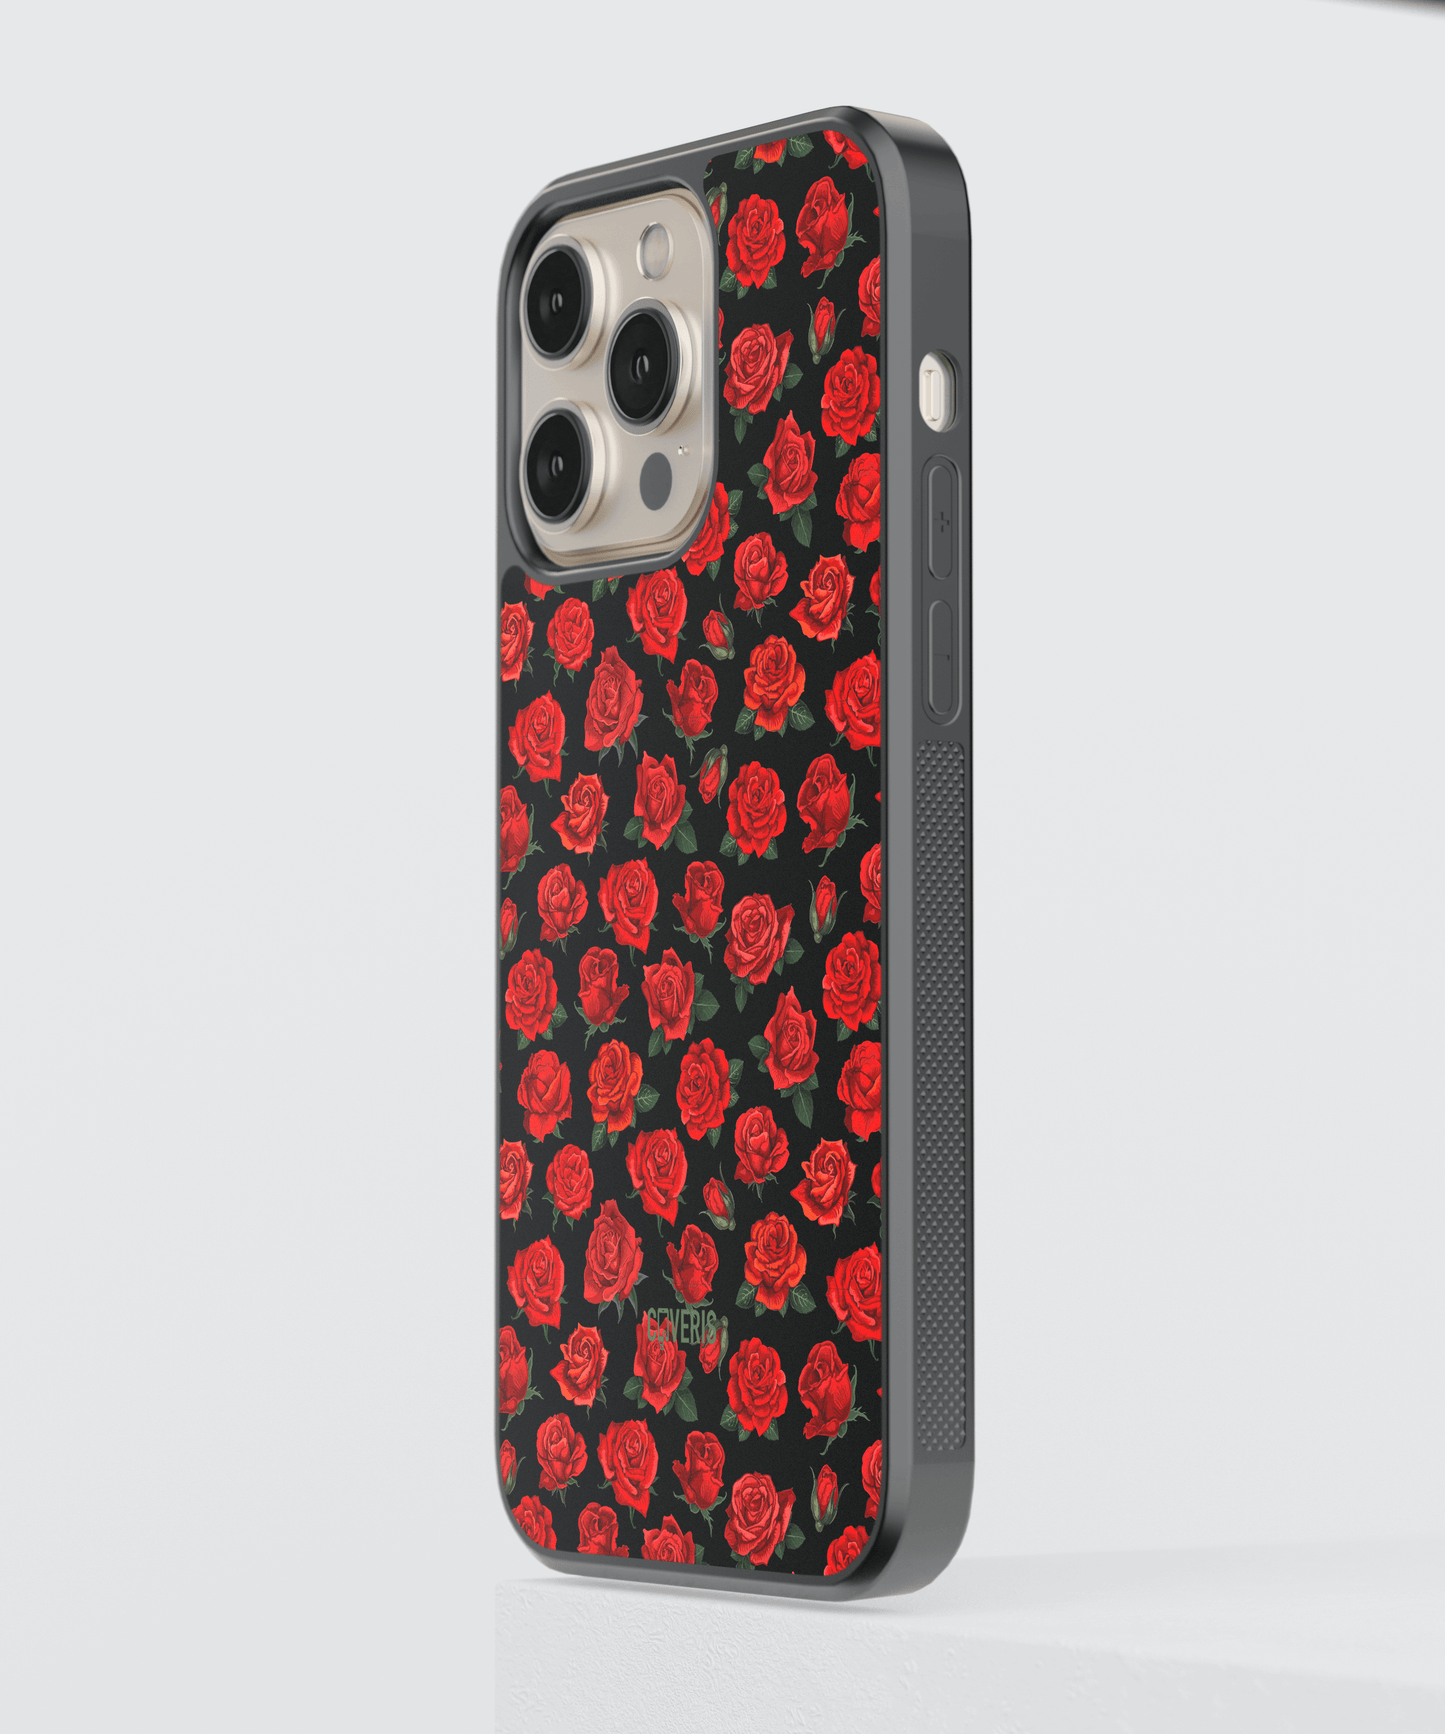 Amore - Oneplus 7 phone case